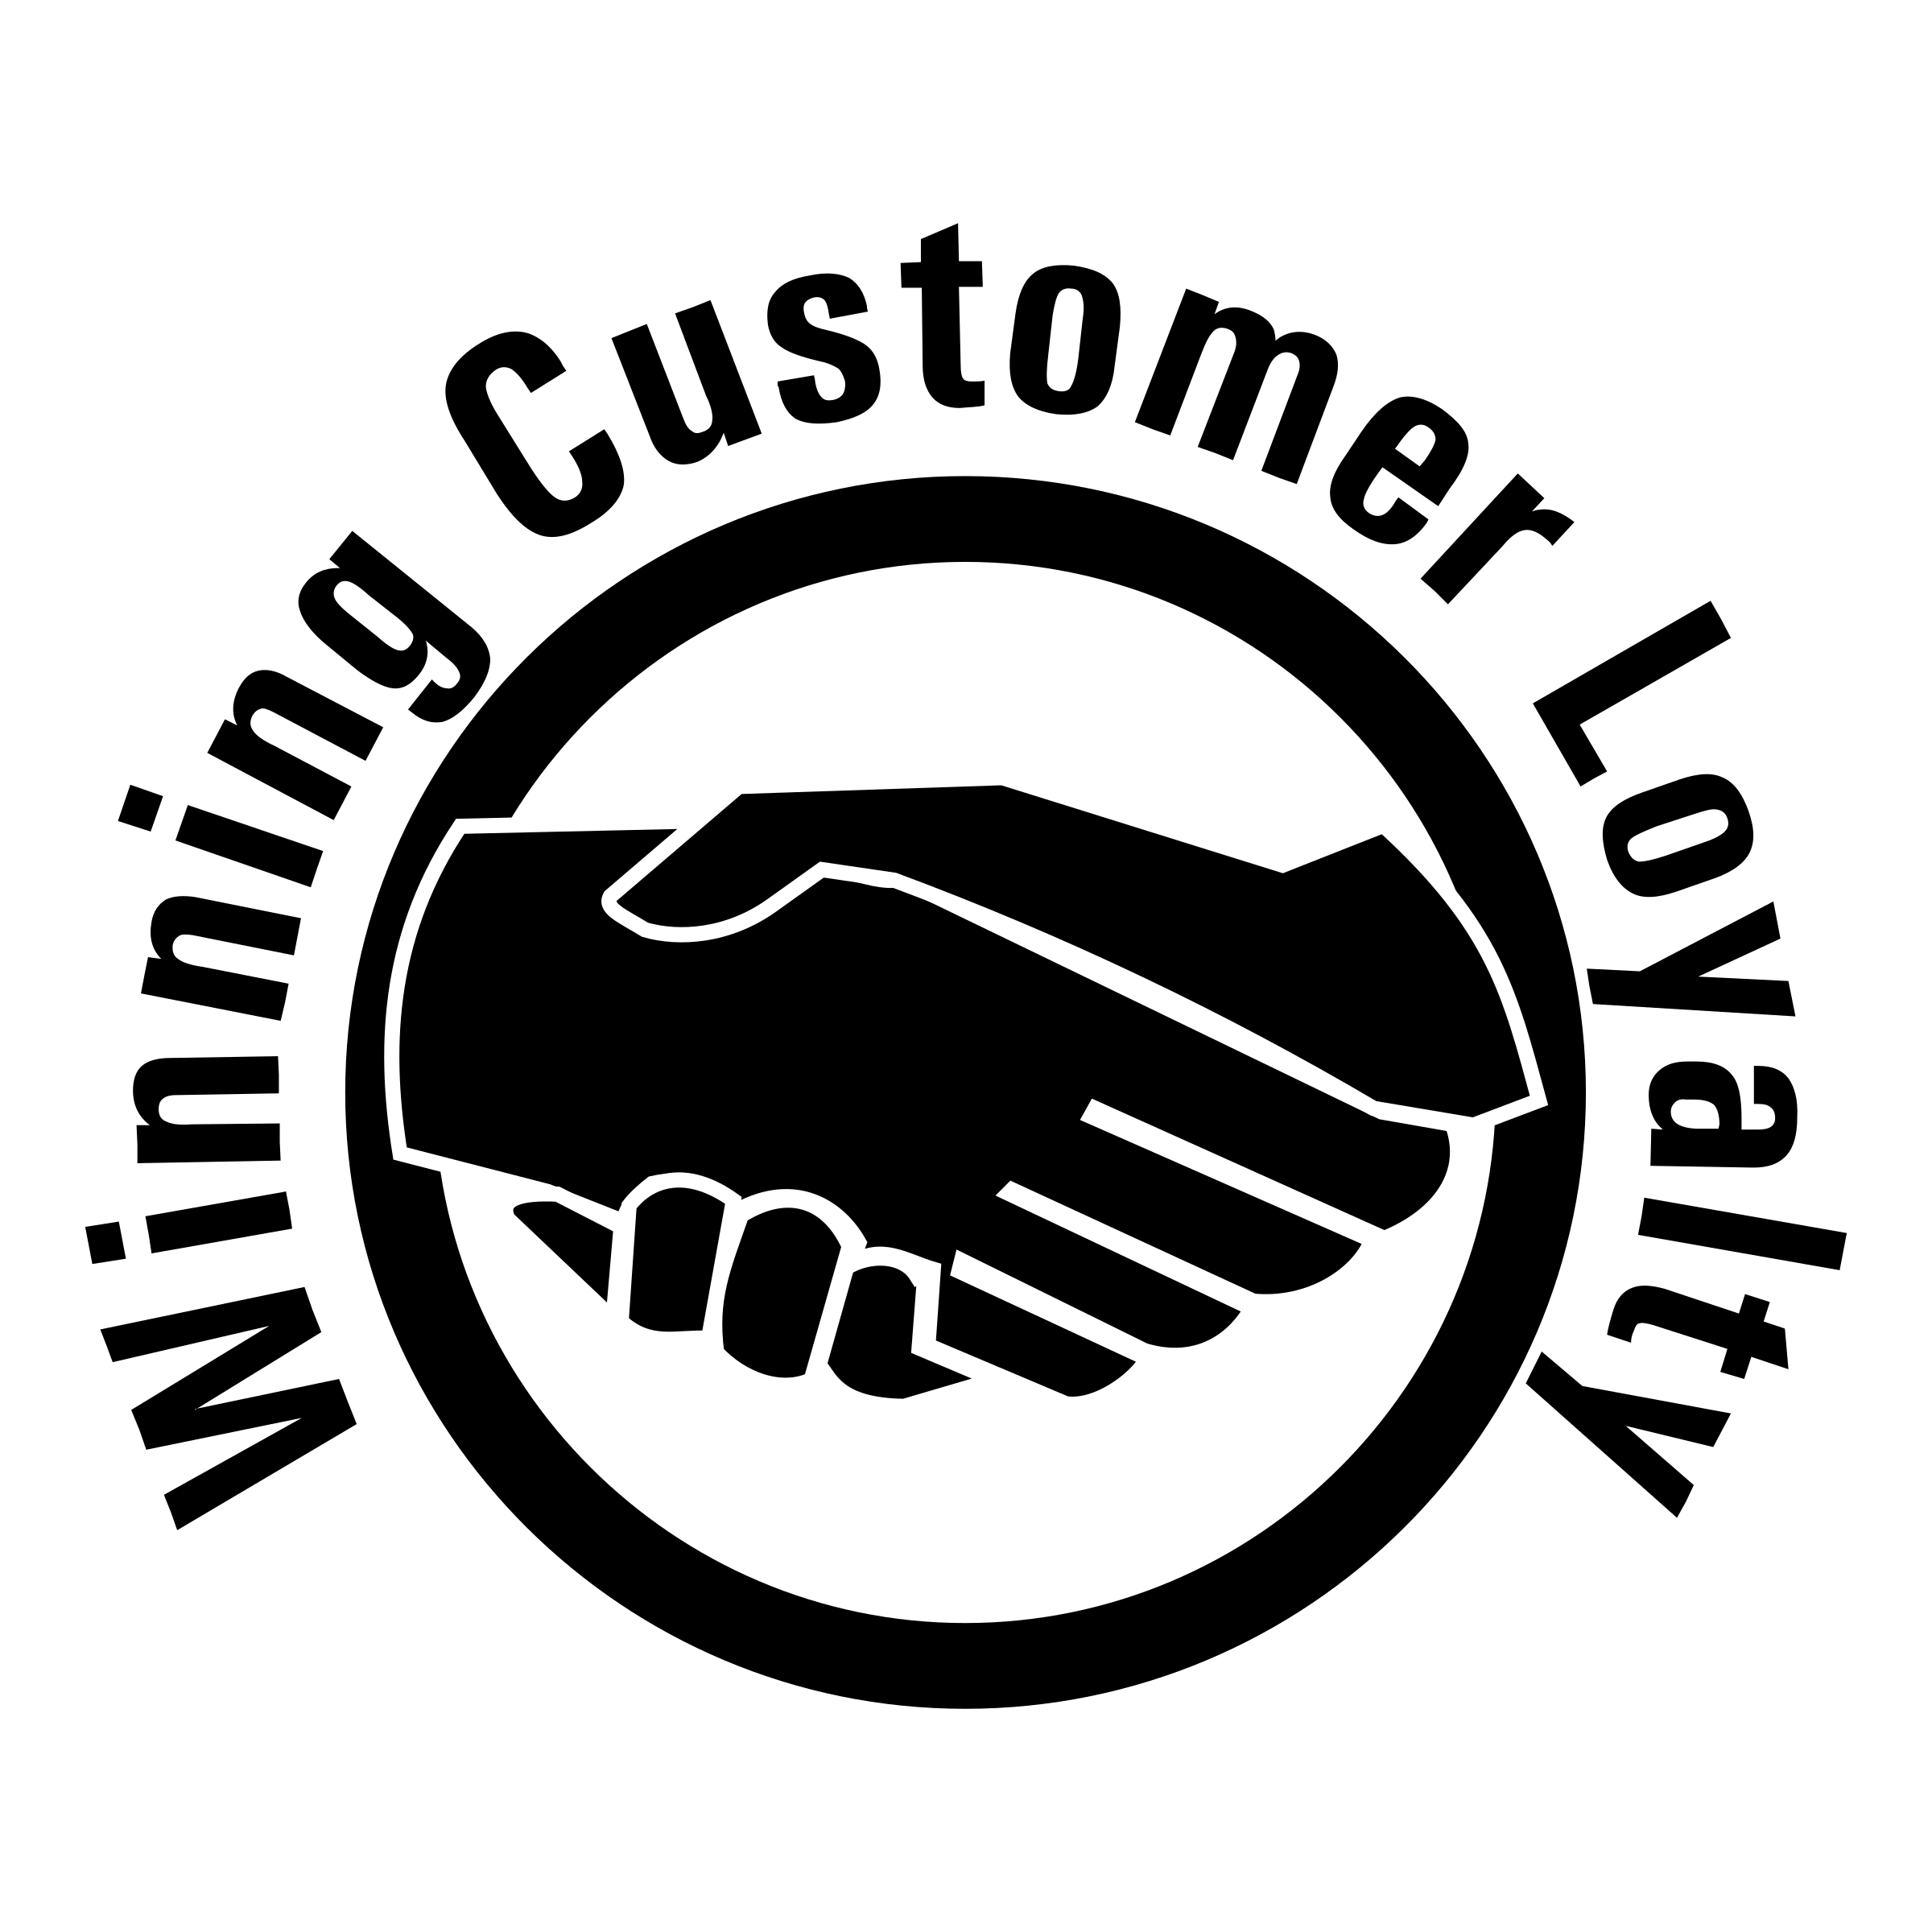 Loyalty Logo - Winning Customer Loyalty Logo PNG Transparent & SVG Vector - Freebie ...